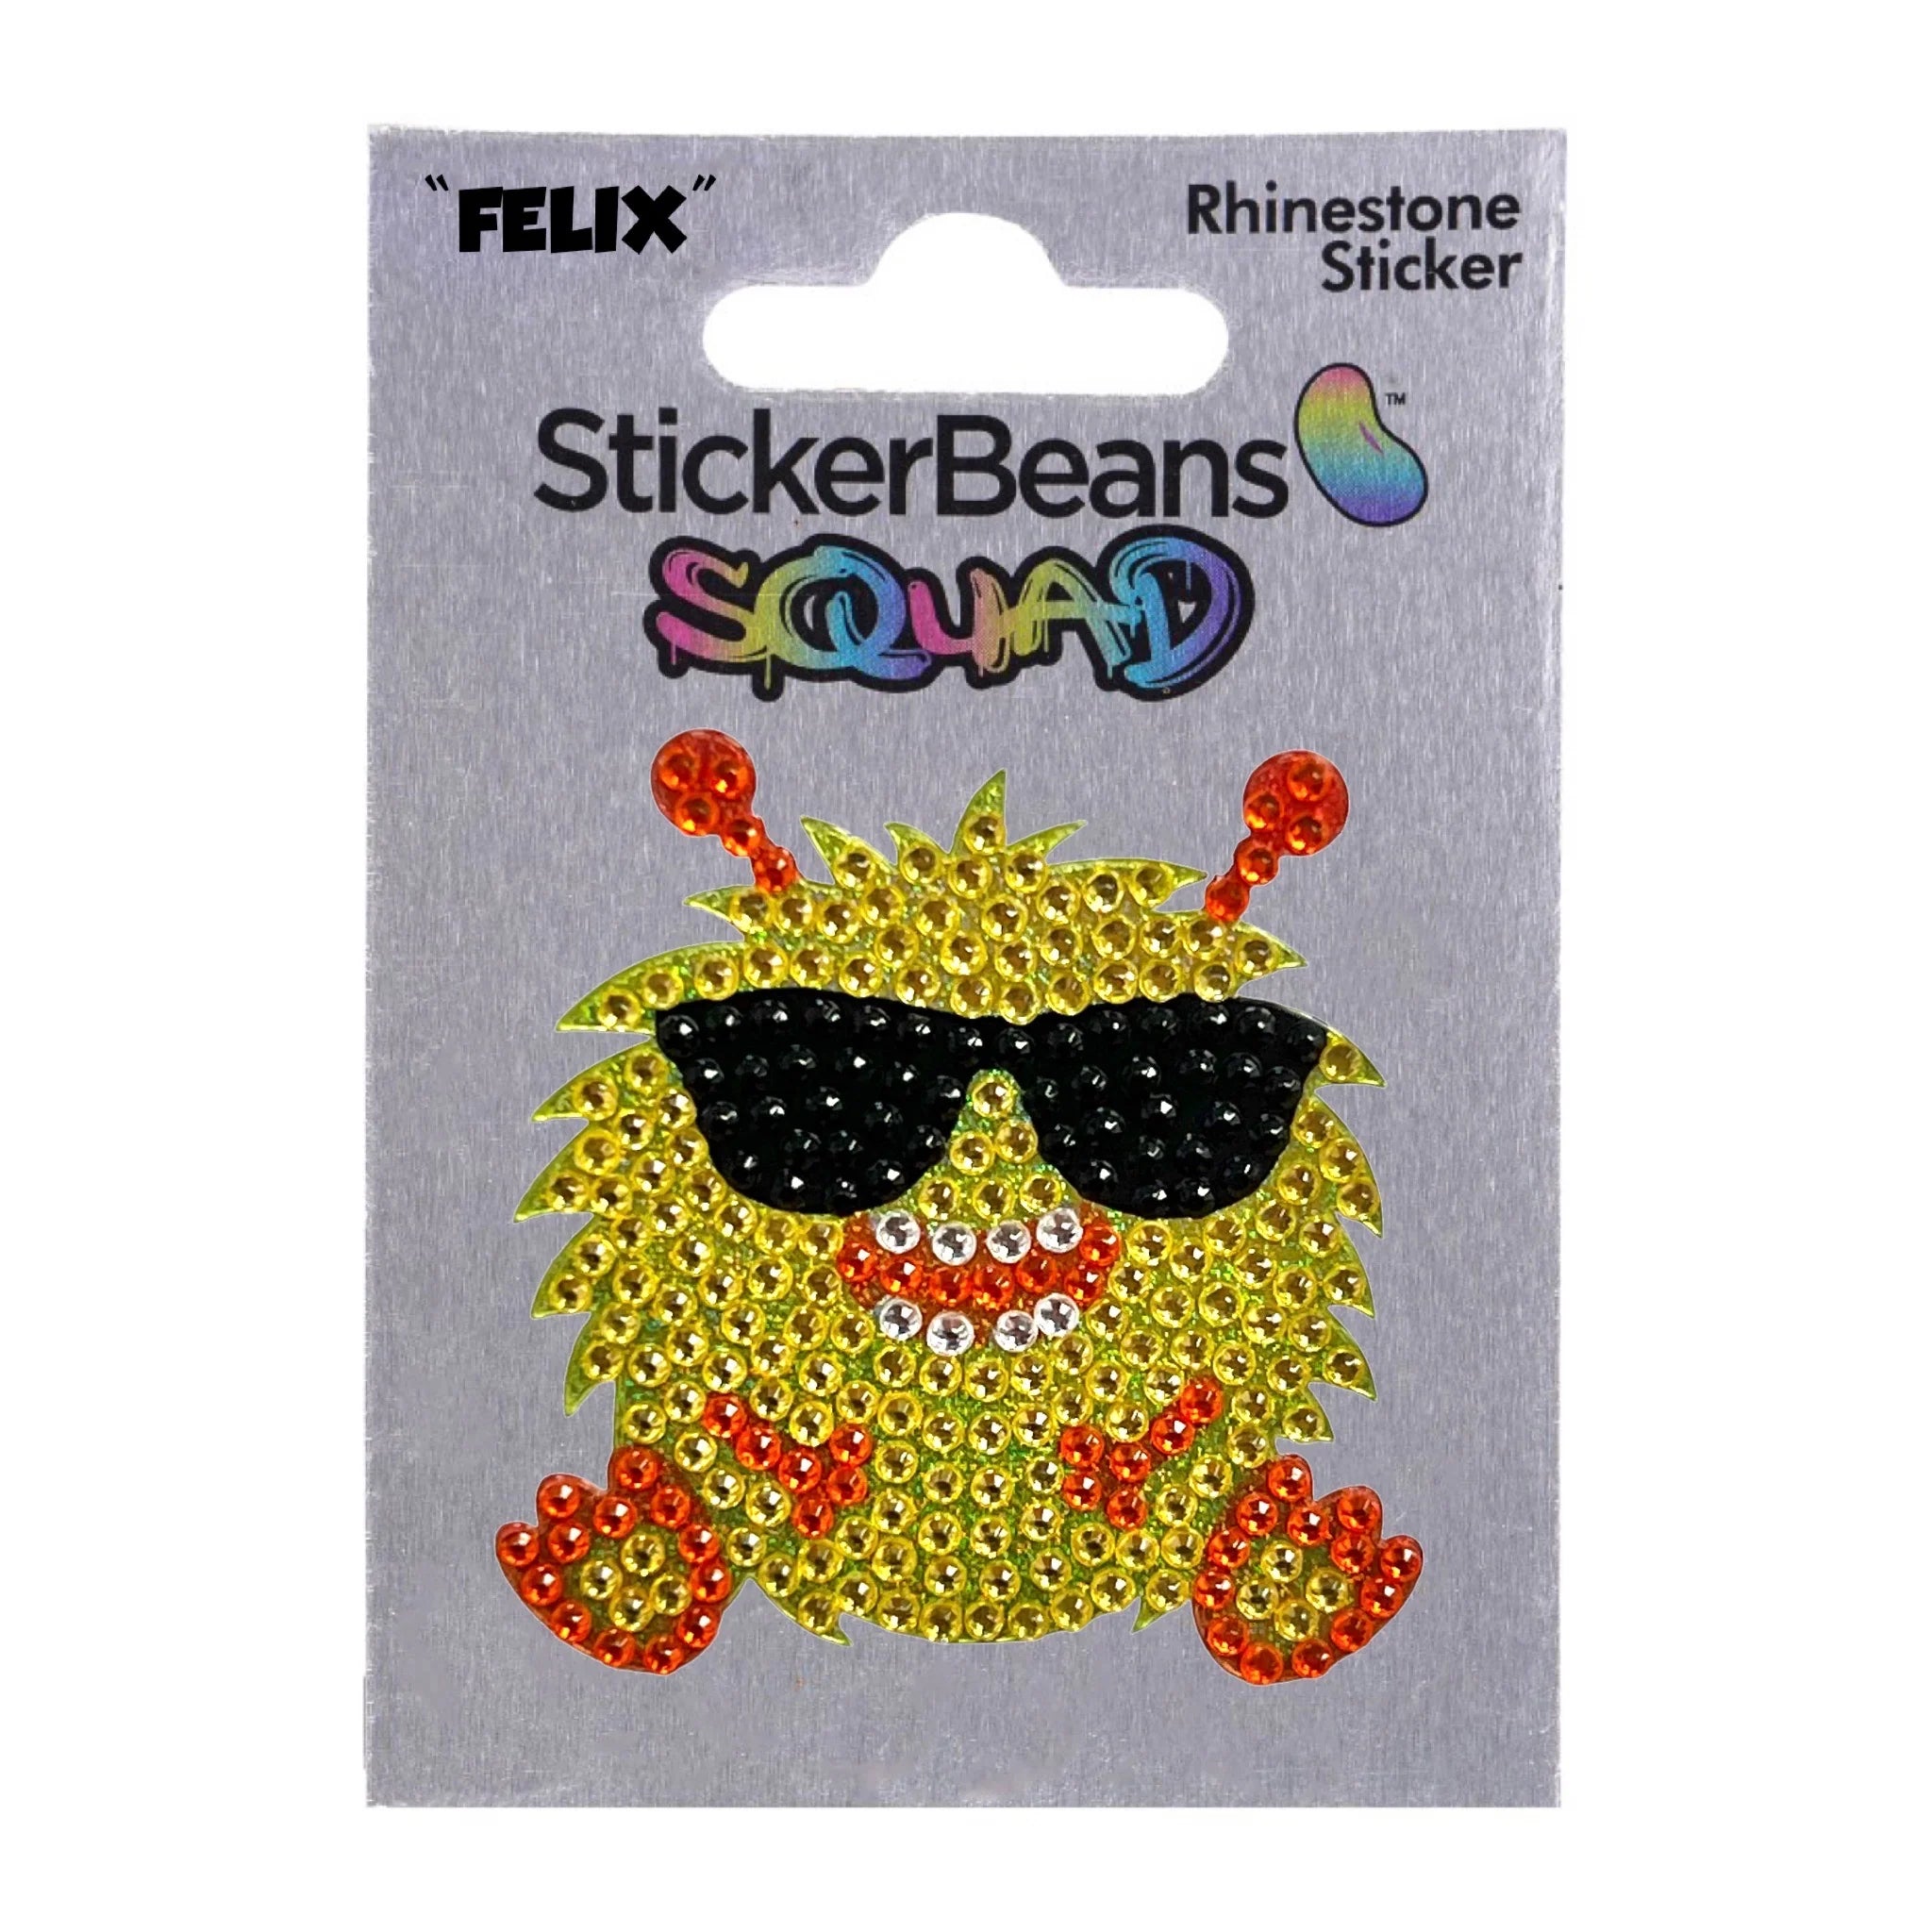 StickerBeans Felix "Squad" Limited Edition Sparkle Sticker – 2"